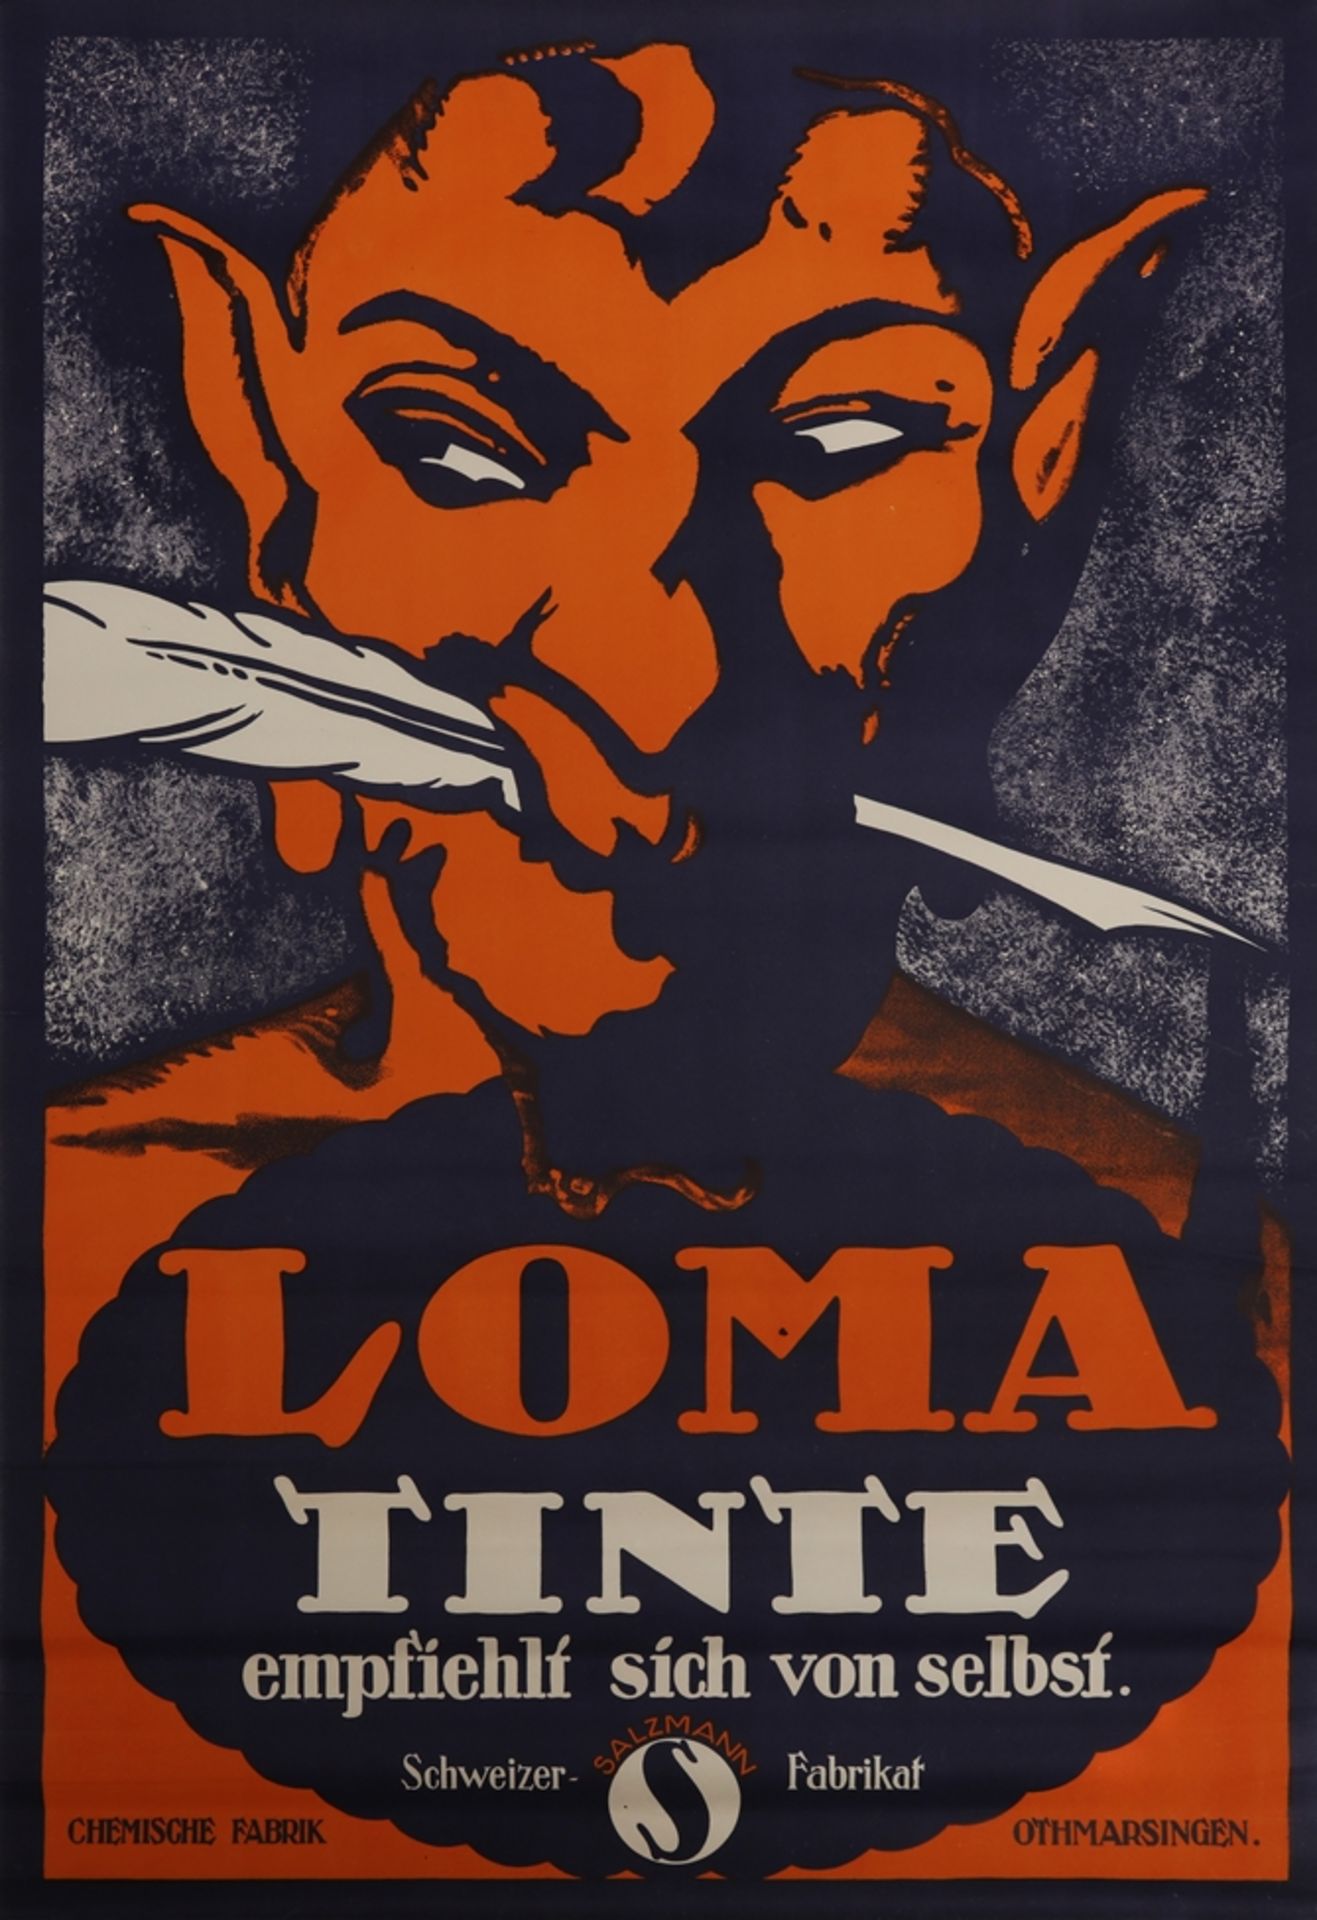 Plakat Loma Tinte, Othmarsingen/Schweiz, um 1920